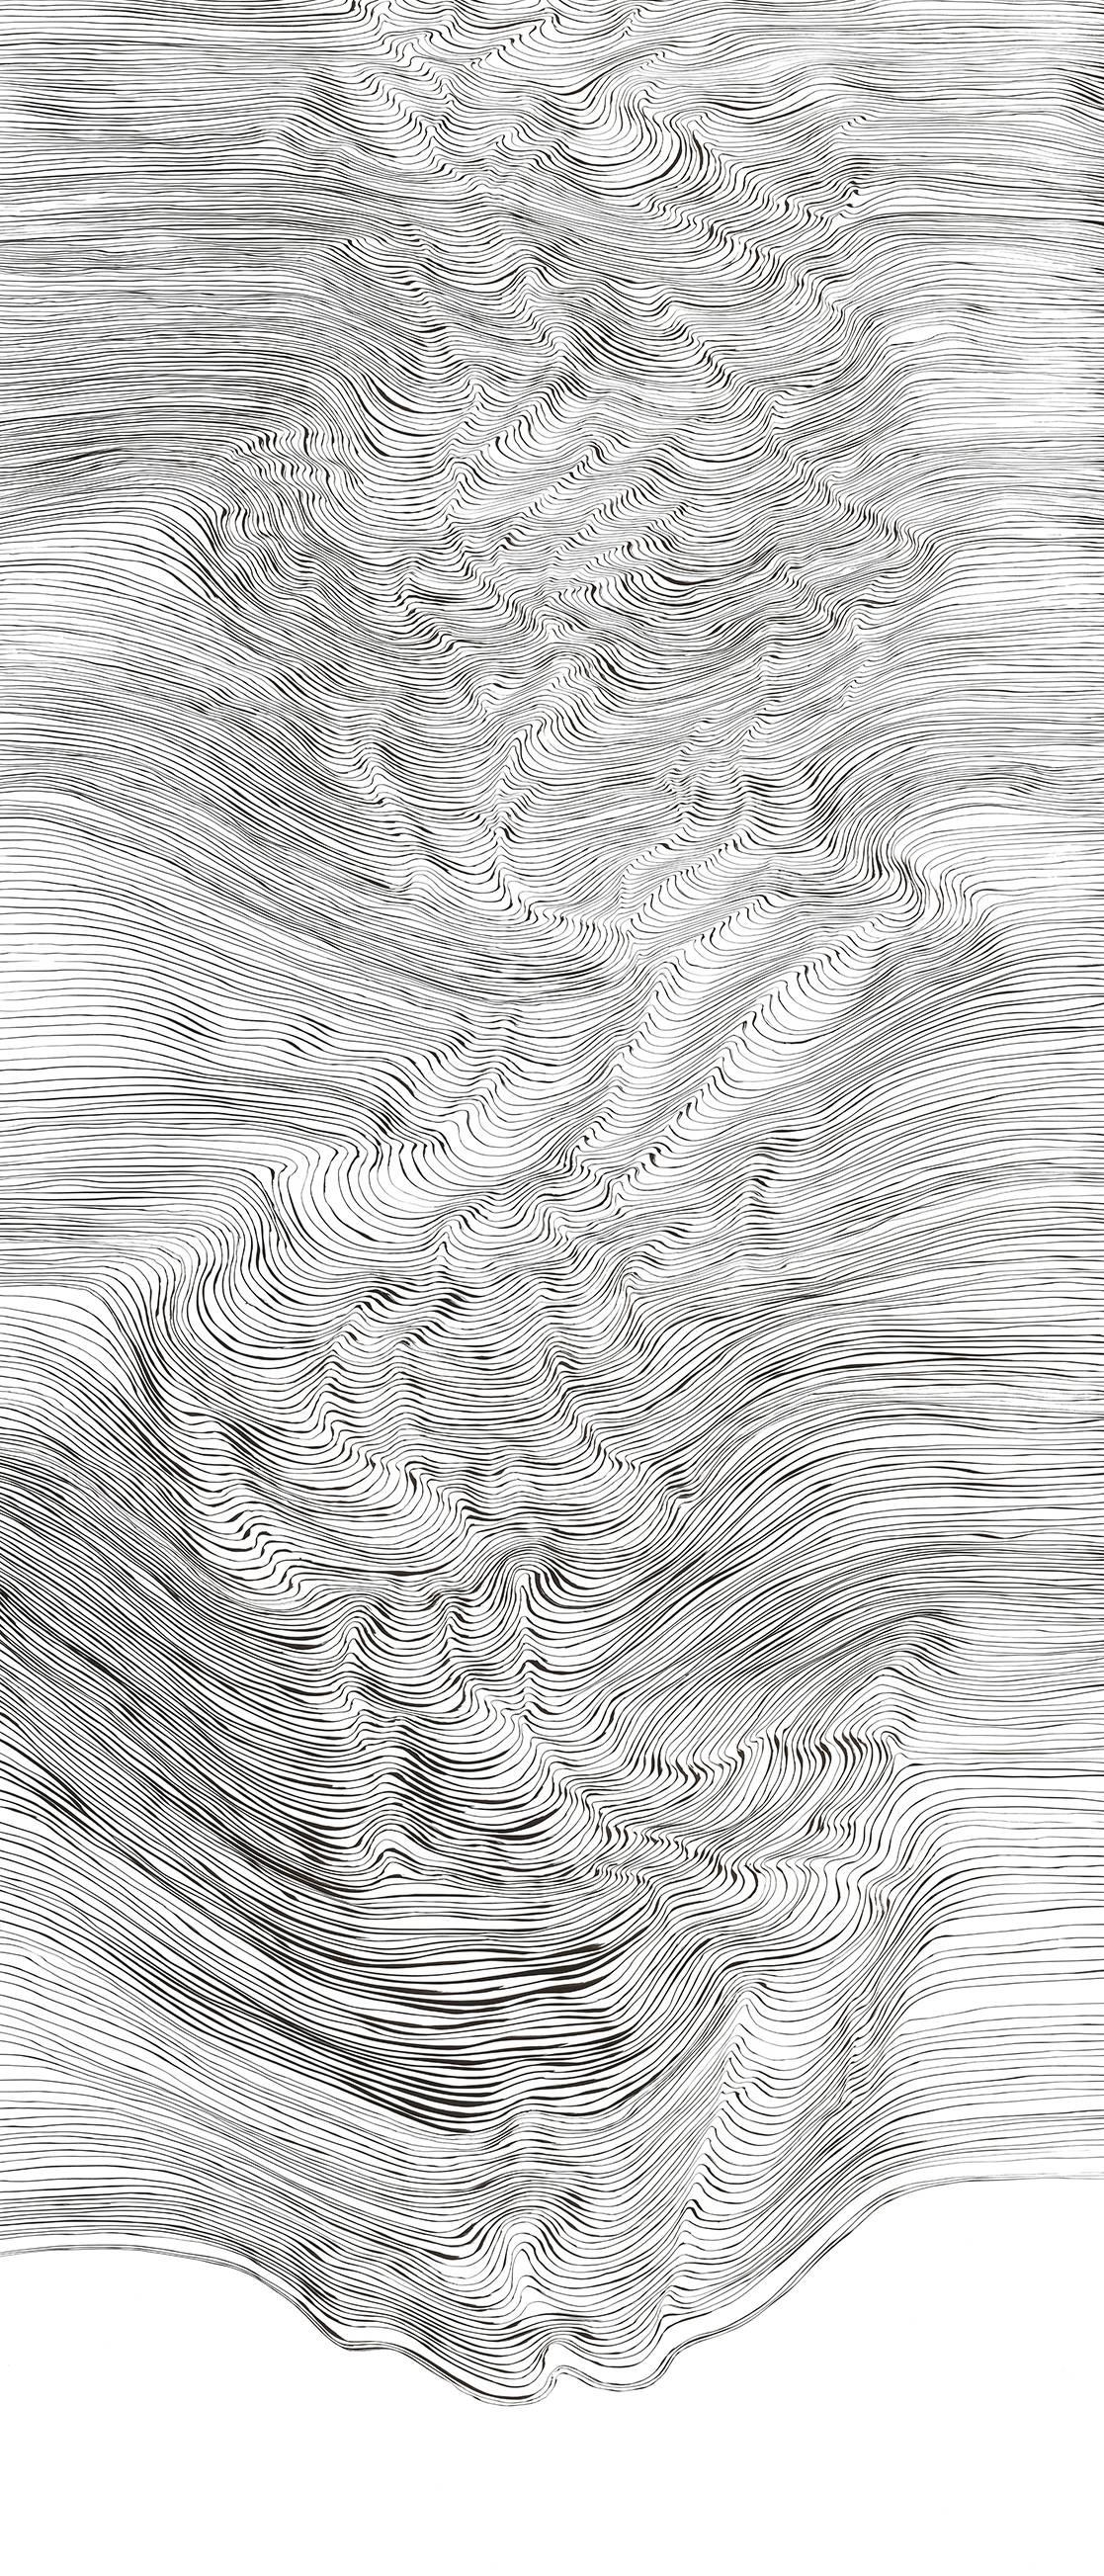 Duncan McDaniel Abstract Drawing - Magic Mirror Scroll 3